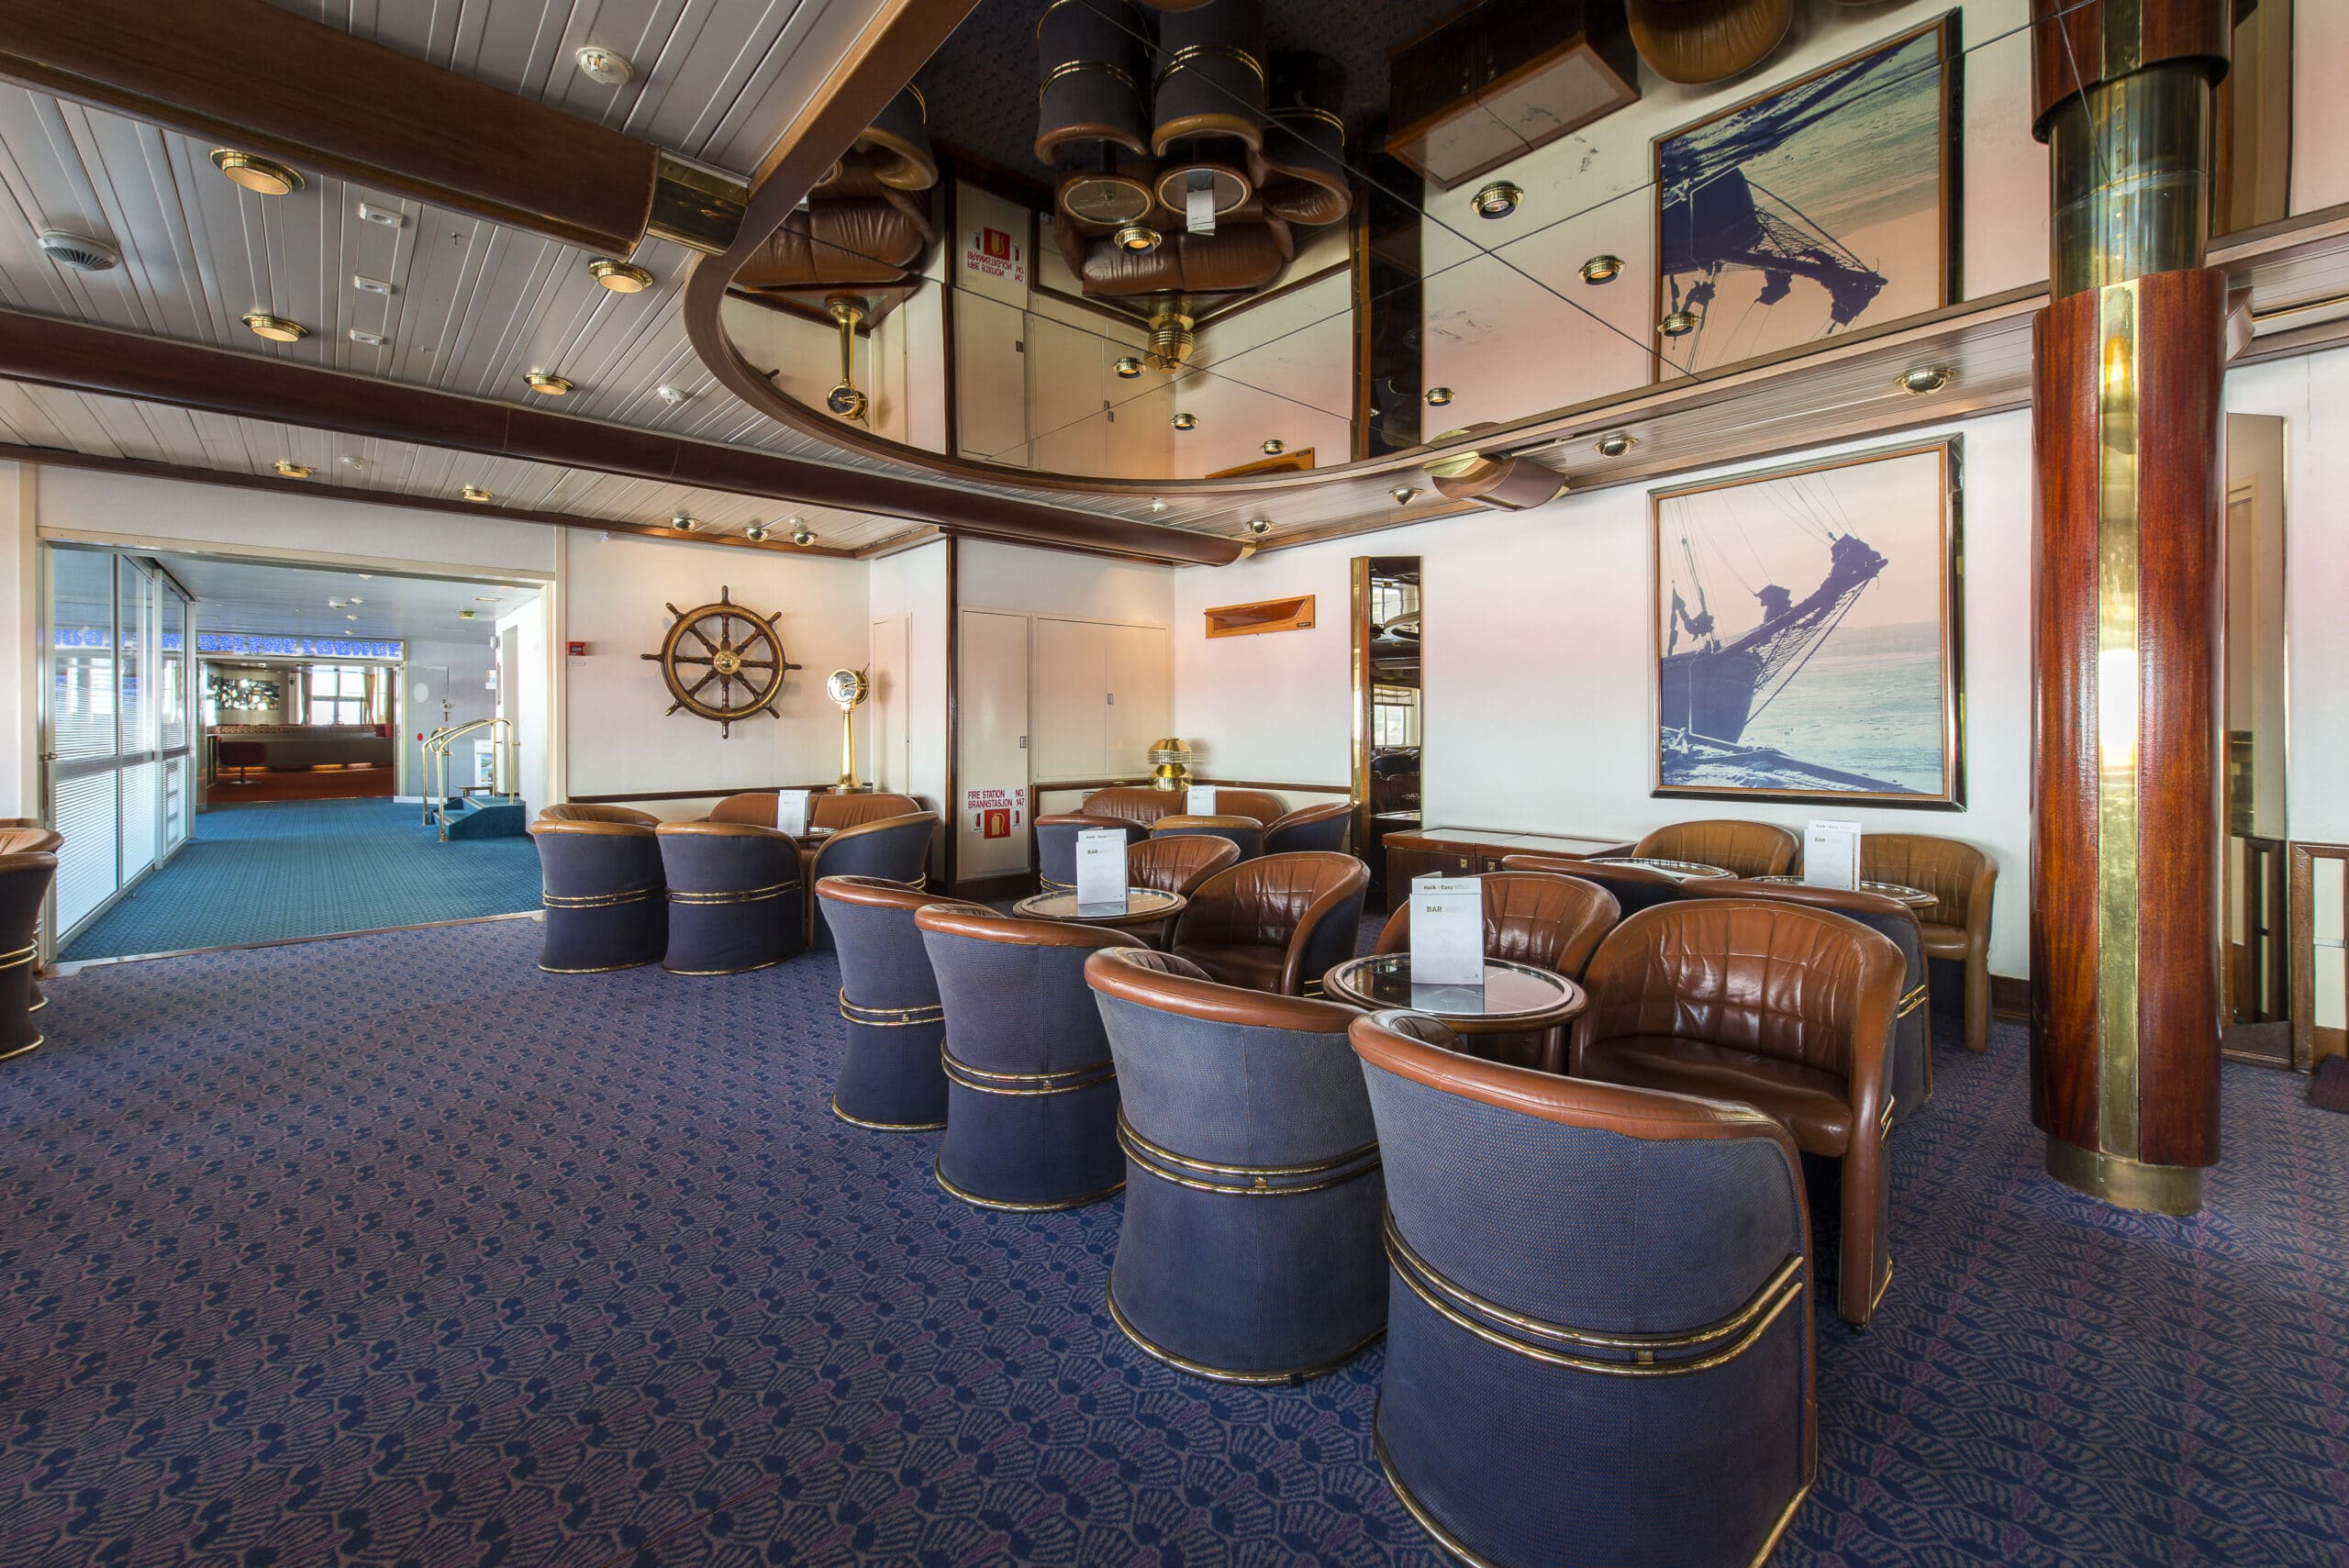 Cruiseschip-Celestyal Olympia-Celestyal-Lounge